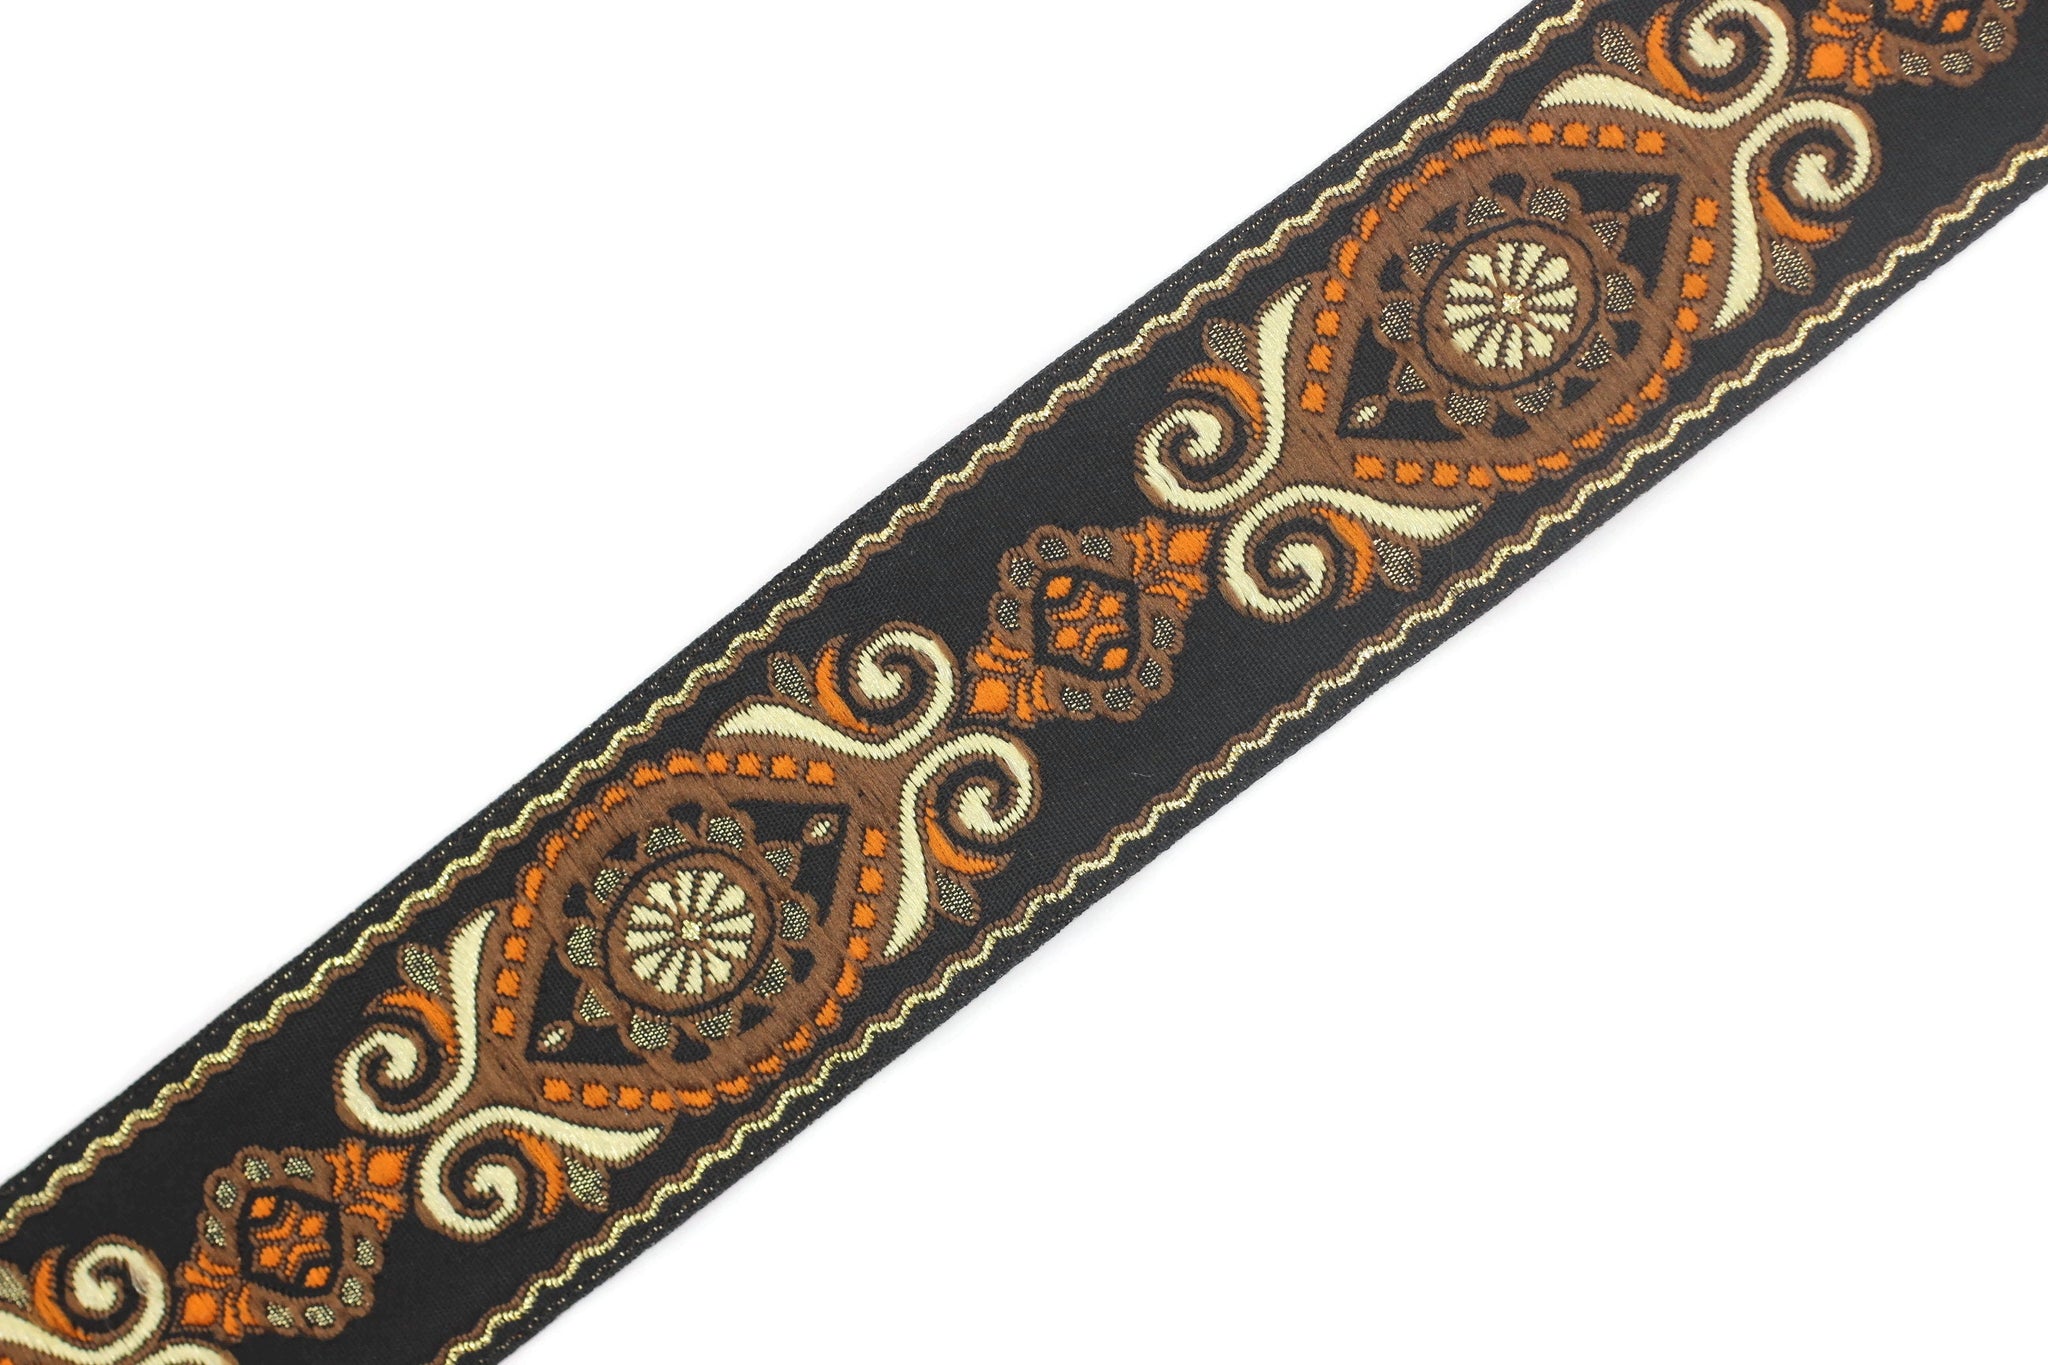 35 mm Eye of Asian Jacquard trims (1.37 inches), jacquard ribbons, Decorative Craft Ribbon, Sewing trim, woven trim, Vintage ribbon, 35950